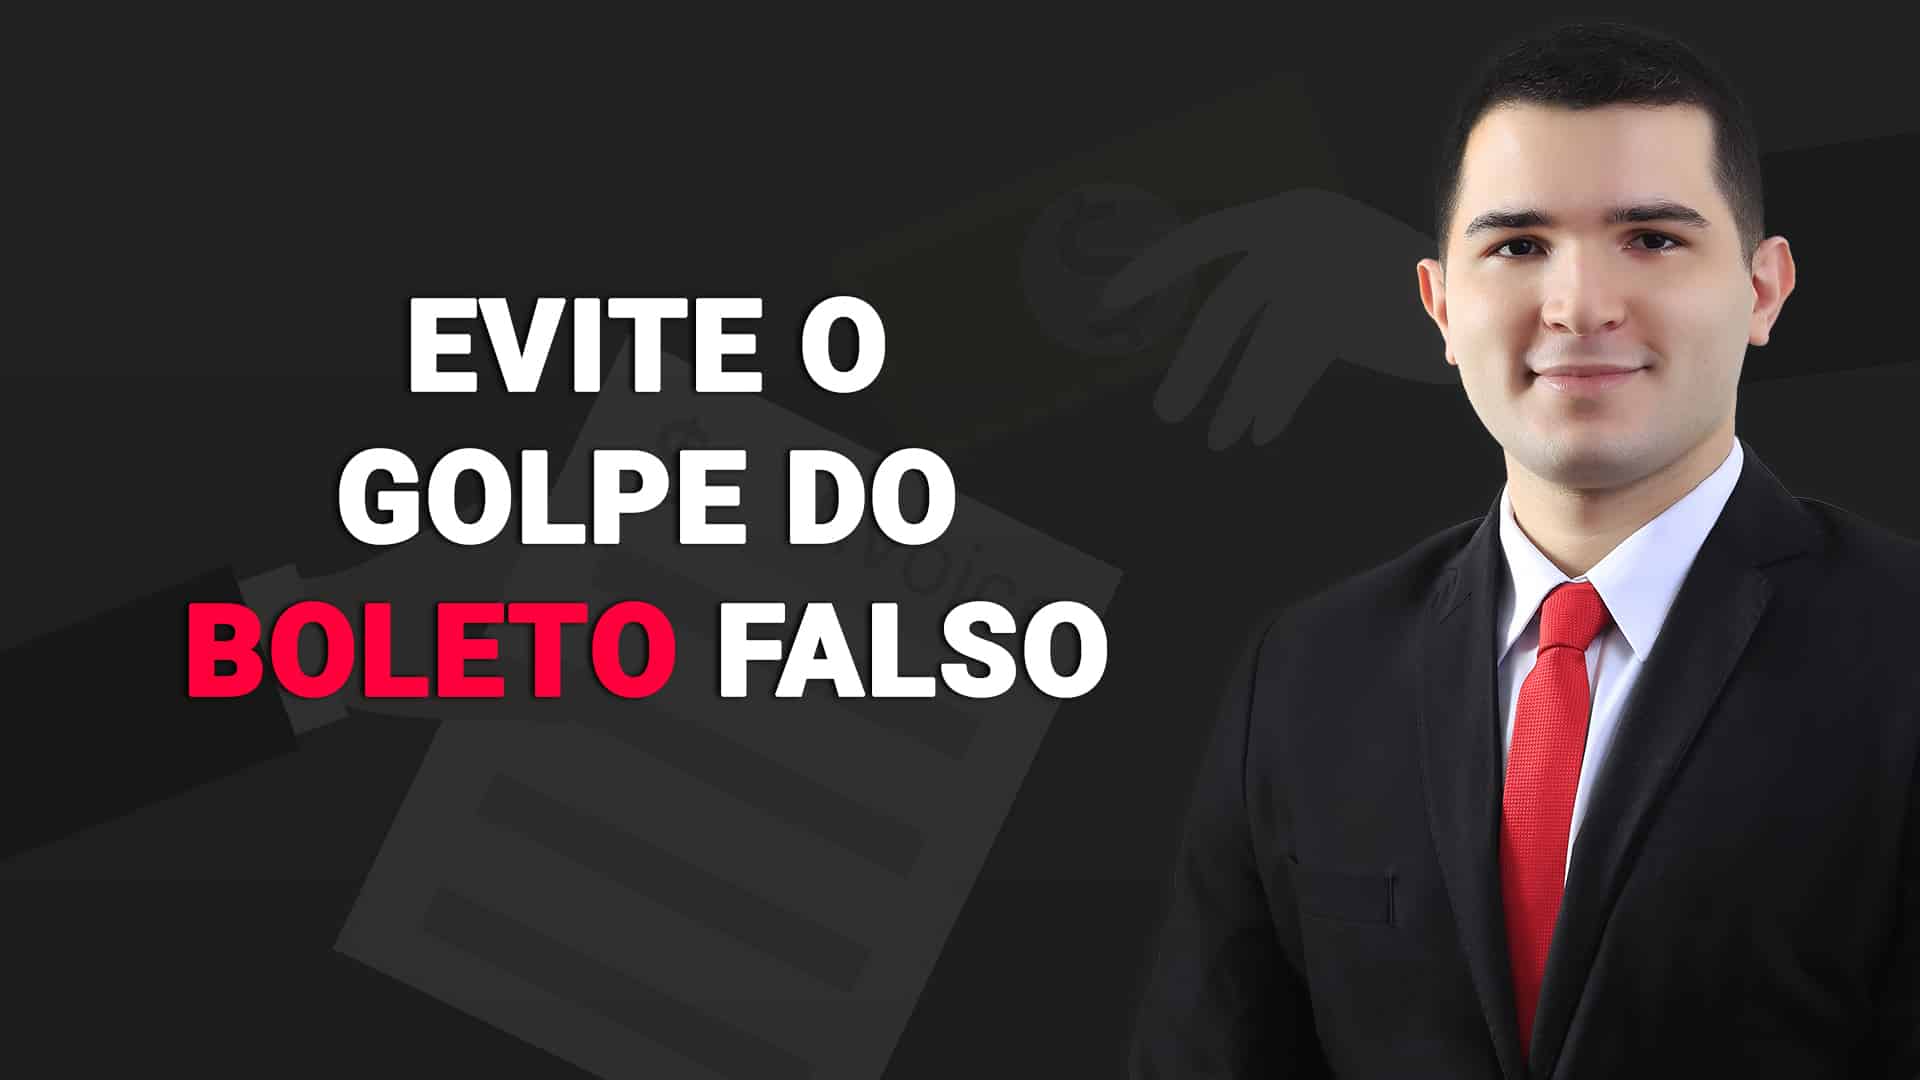 You are currently viewing Evite o golpe do boleto falso!